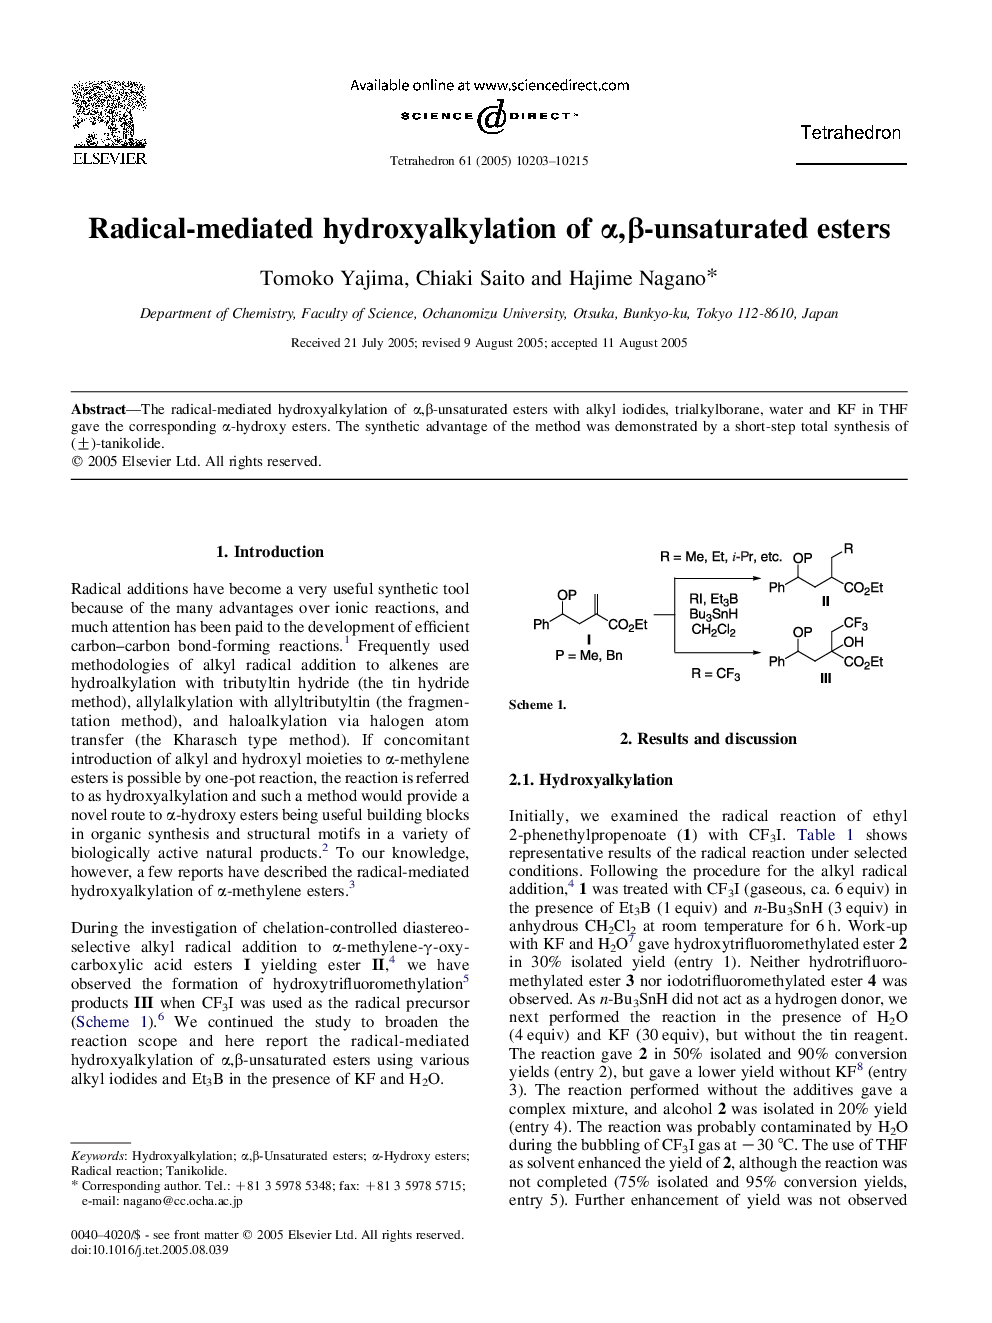 Radical-mediated hydroxyalkylation of Î±,Î²-unsaturated esters